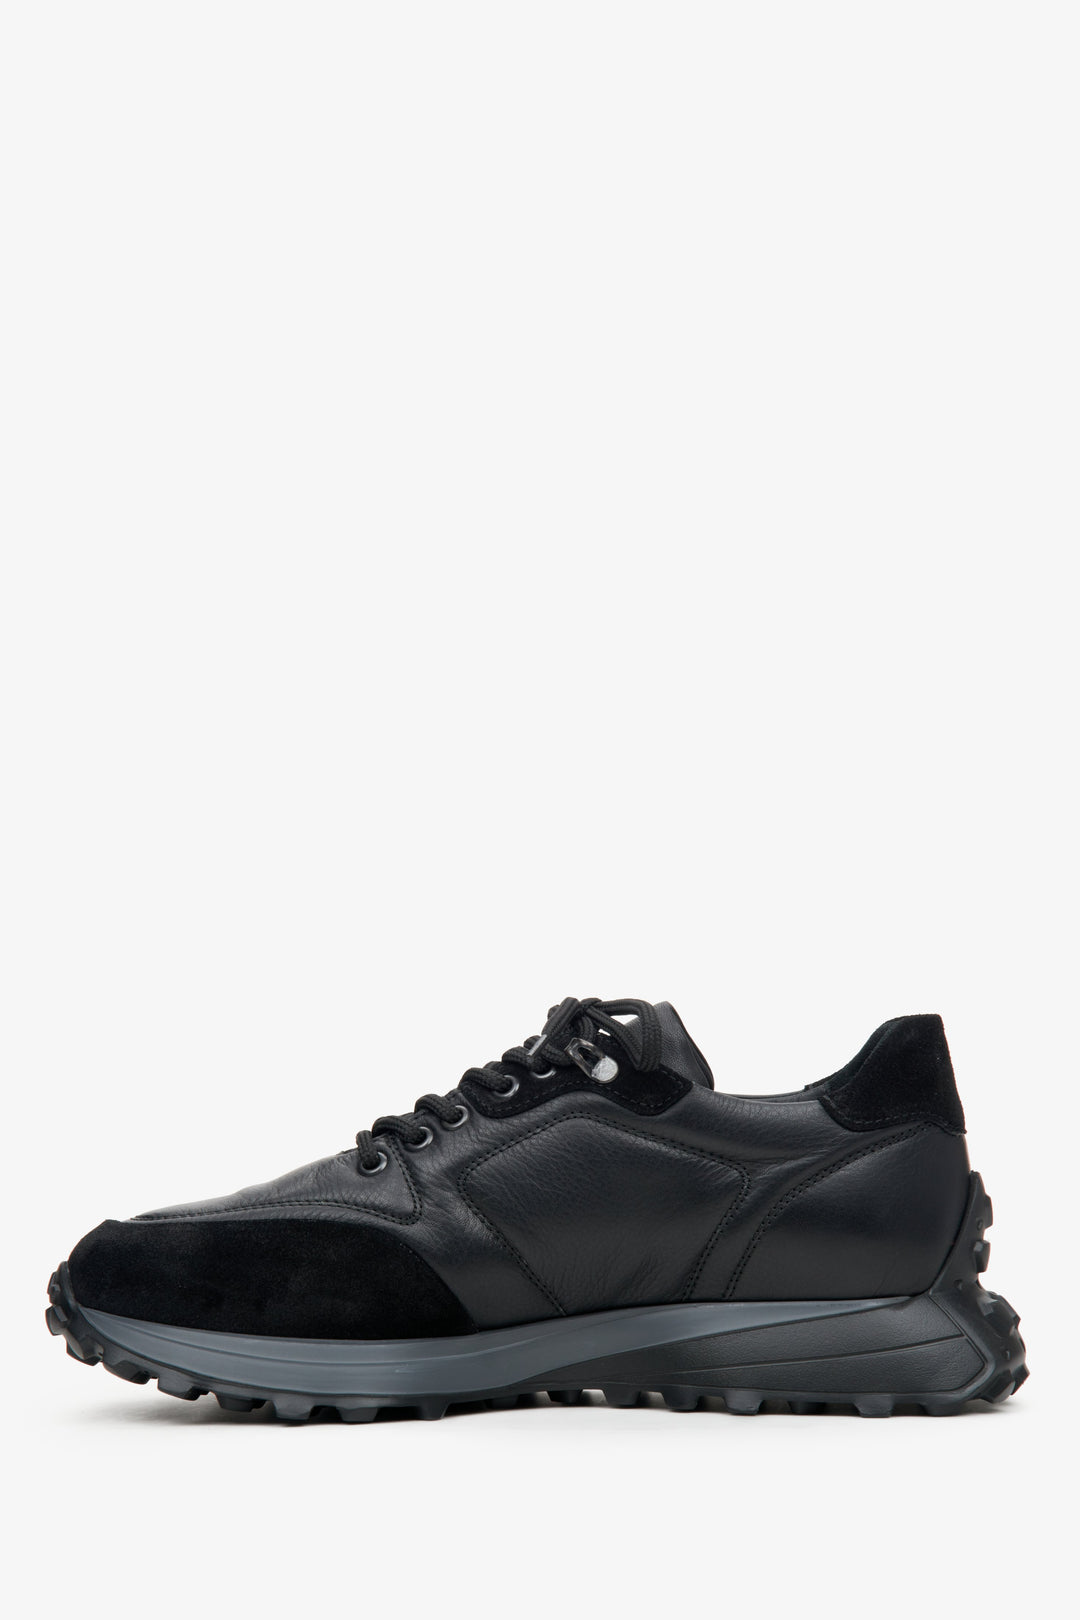 Men's black athletic sneakers by Estro - shoe profile.